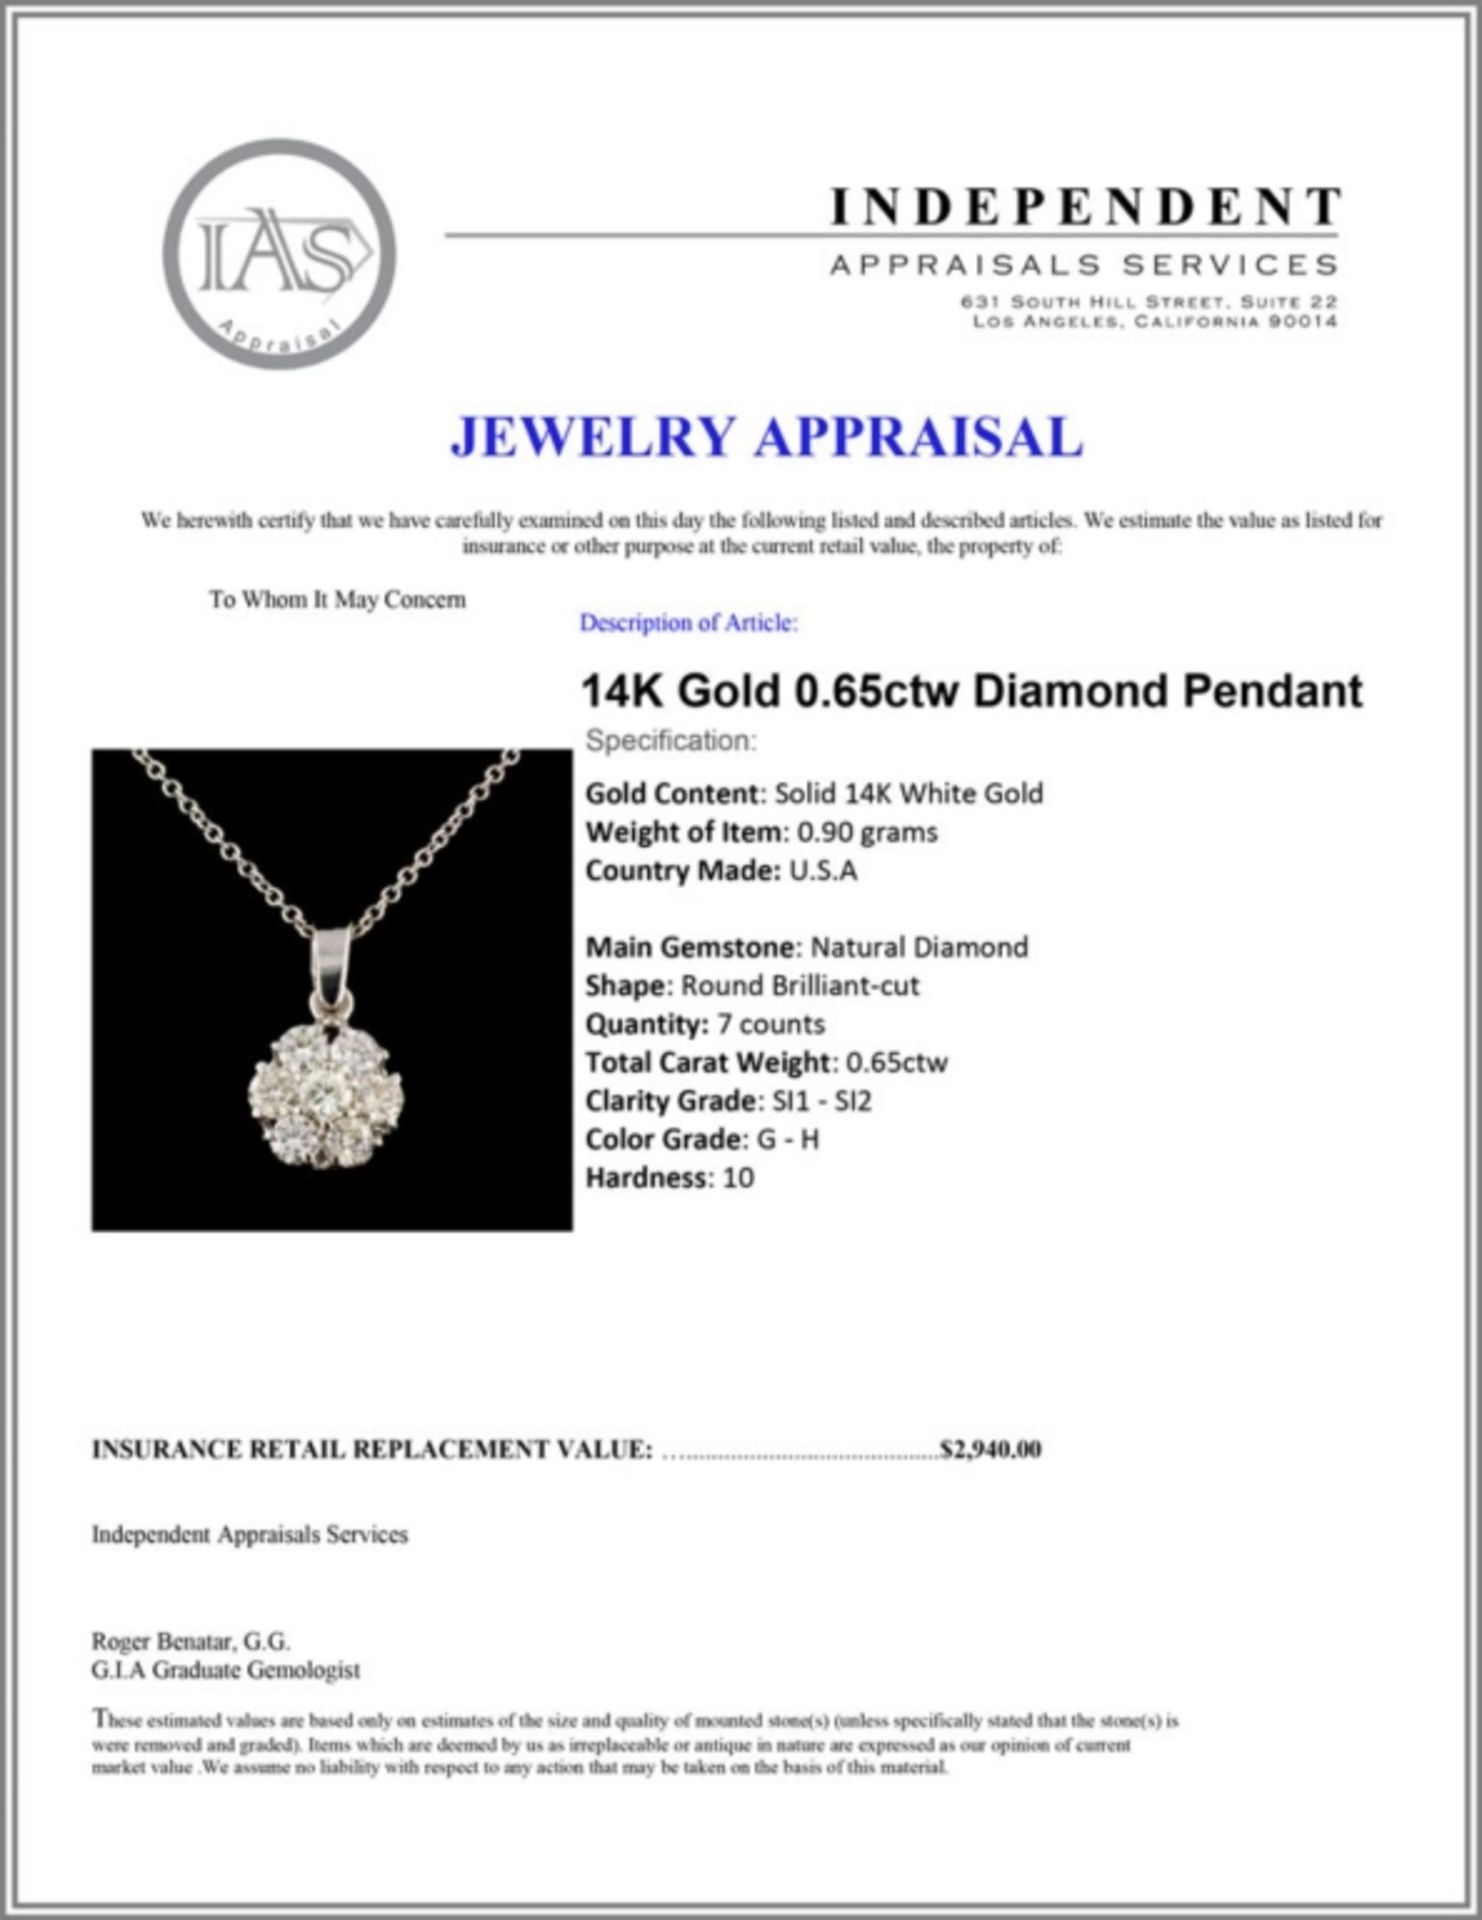 14K Gold 0.65ctw Diamond Pendant - Image 4 of 4